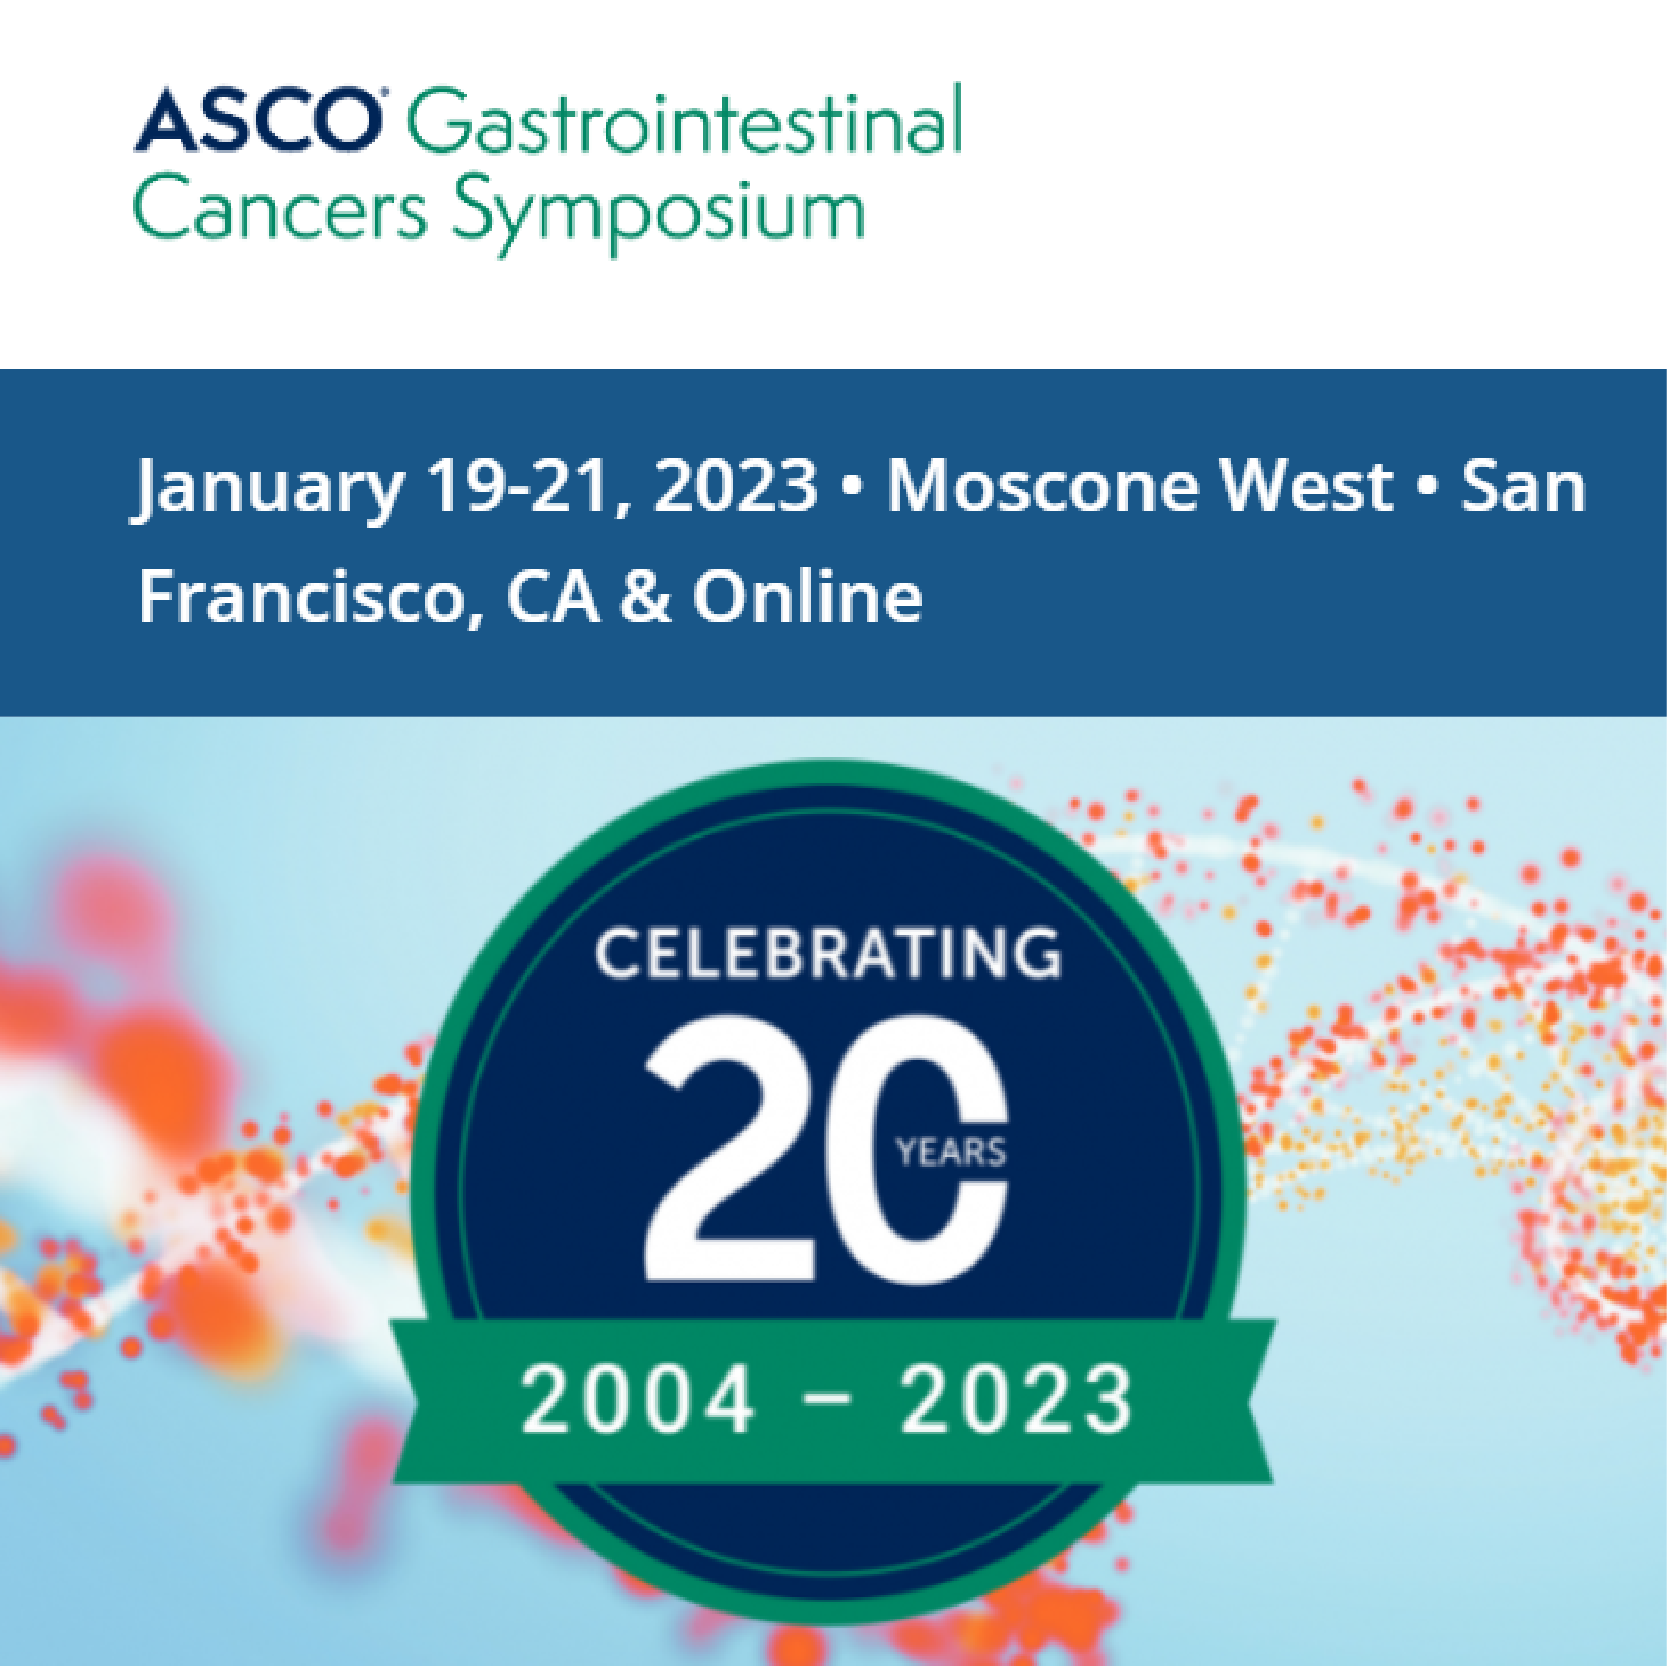 Medflixs ASCO Gastrointestinal Cancers Symposium ASCO 2023